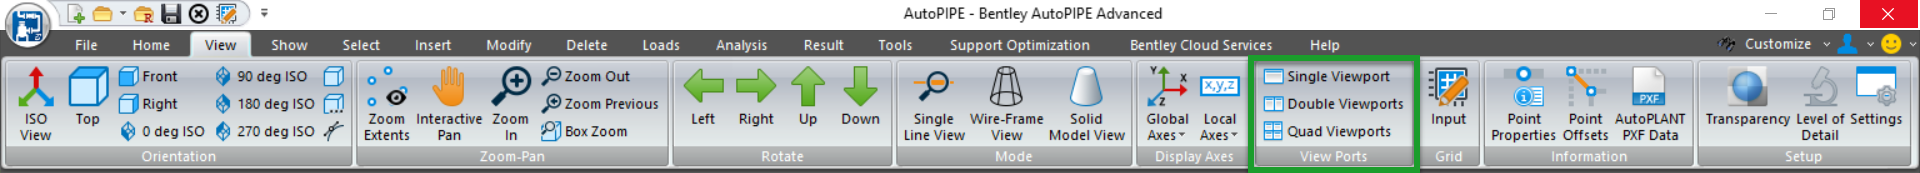 AutoPIPE View Ports, AutoPIPE Workflow, AutoPIPE Design Software